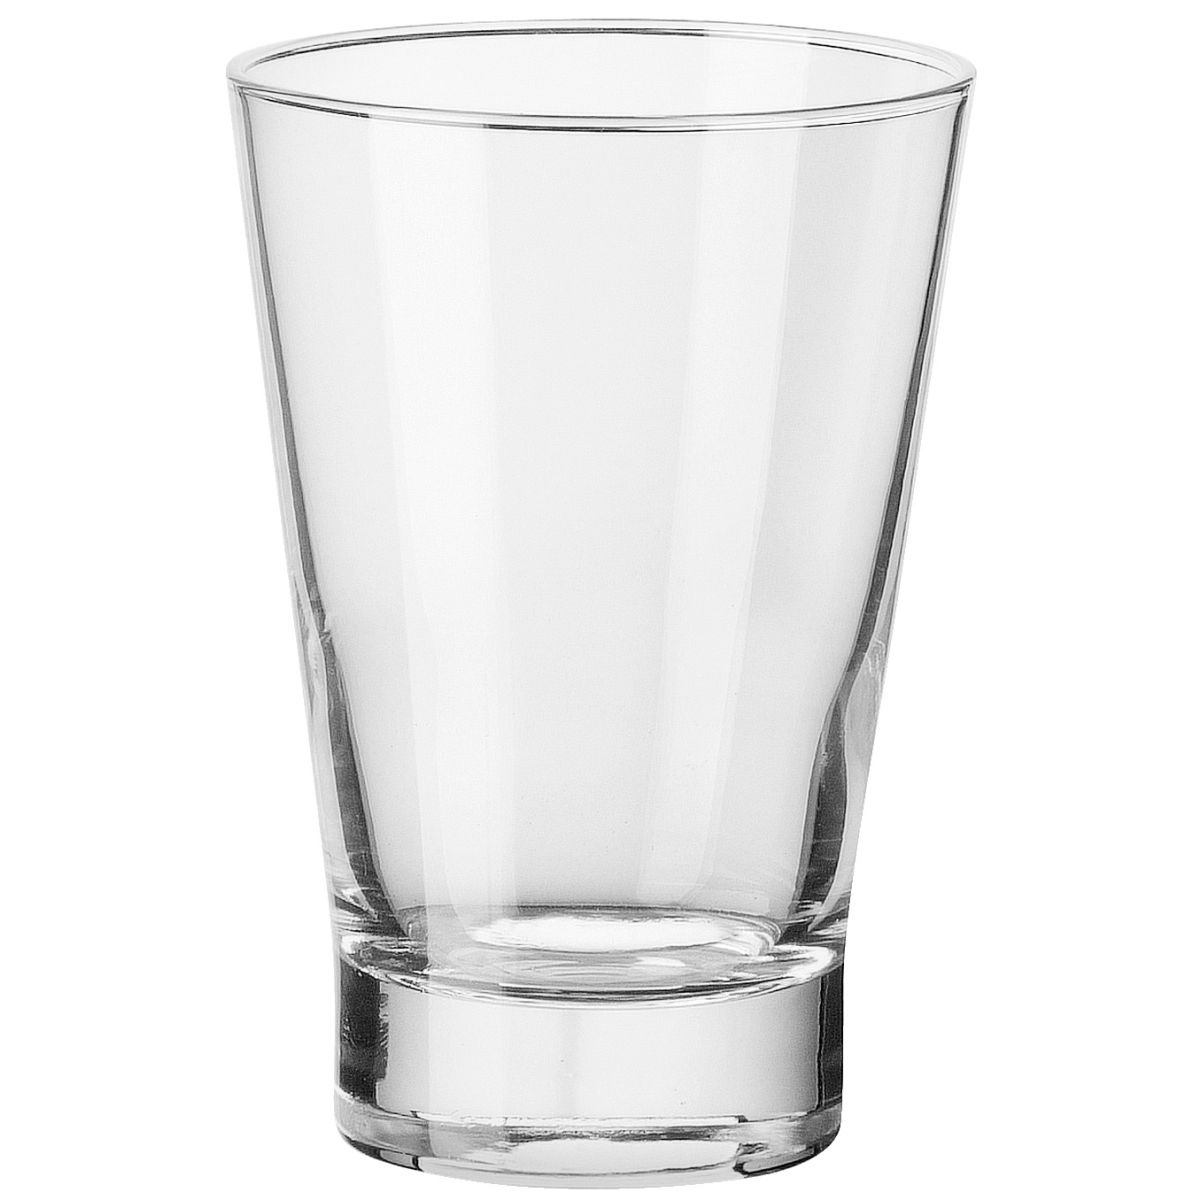 Royal leerdam Drinkglas York; 270ml, 7.7x11.9 cm (ØxH); transparant; 6 stuk / verpakking